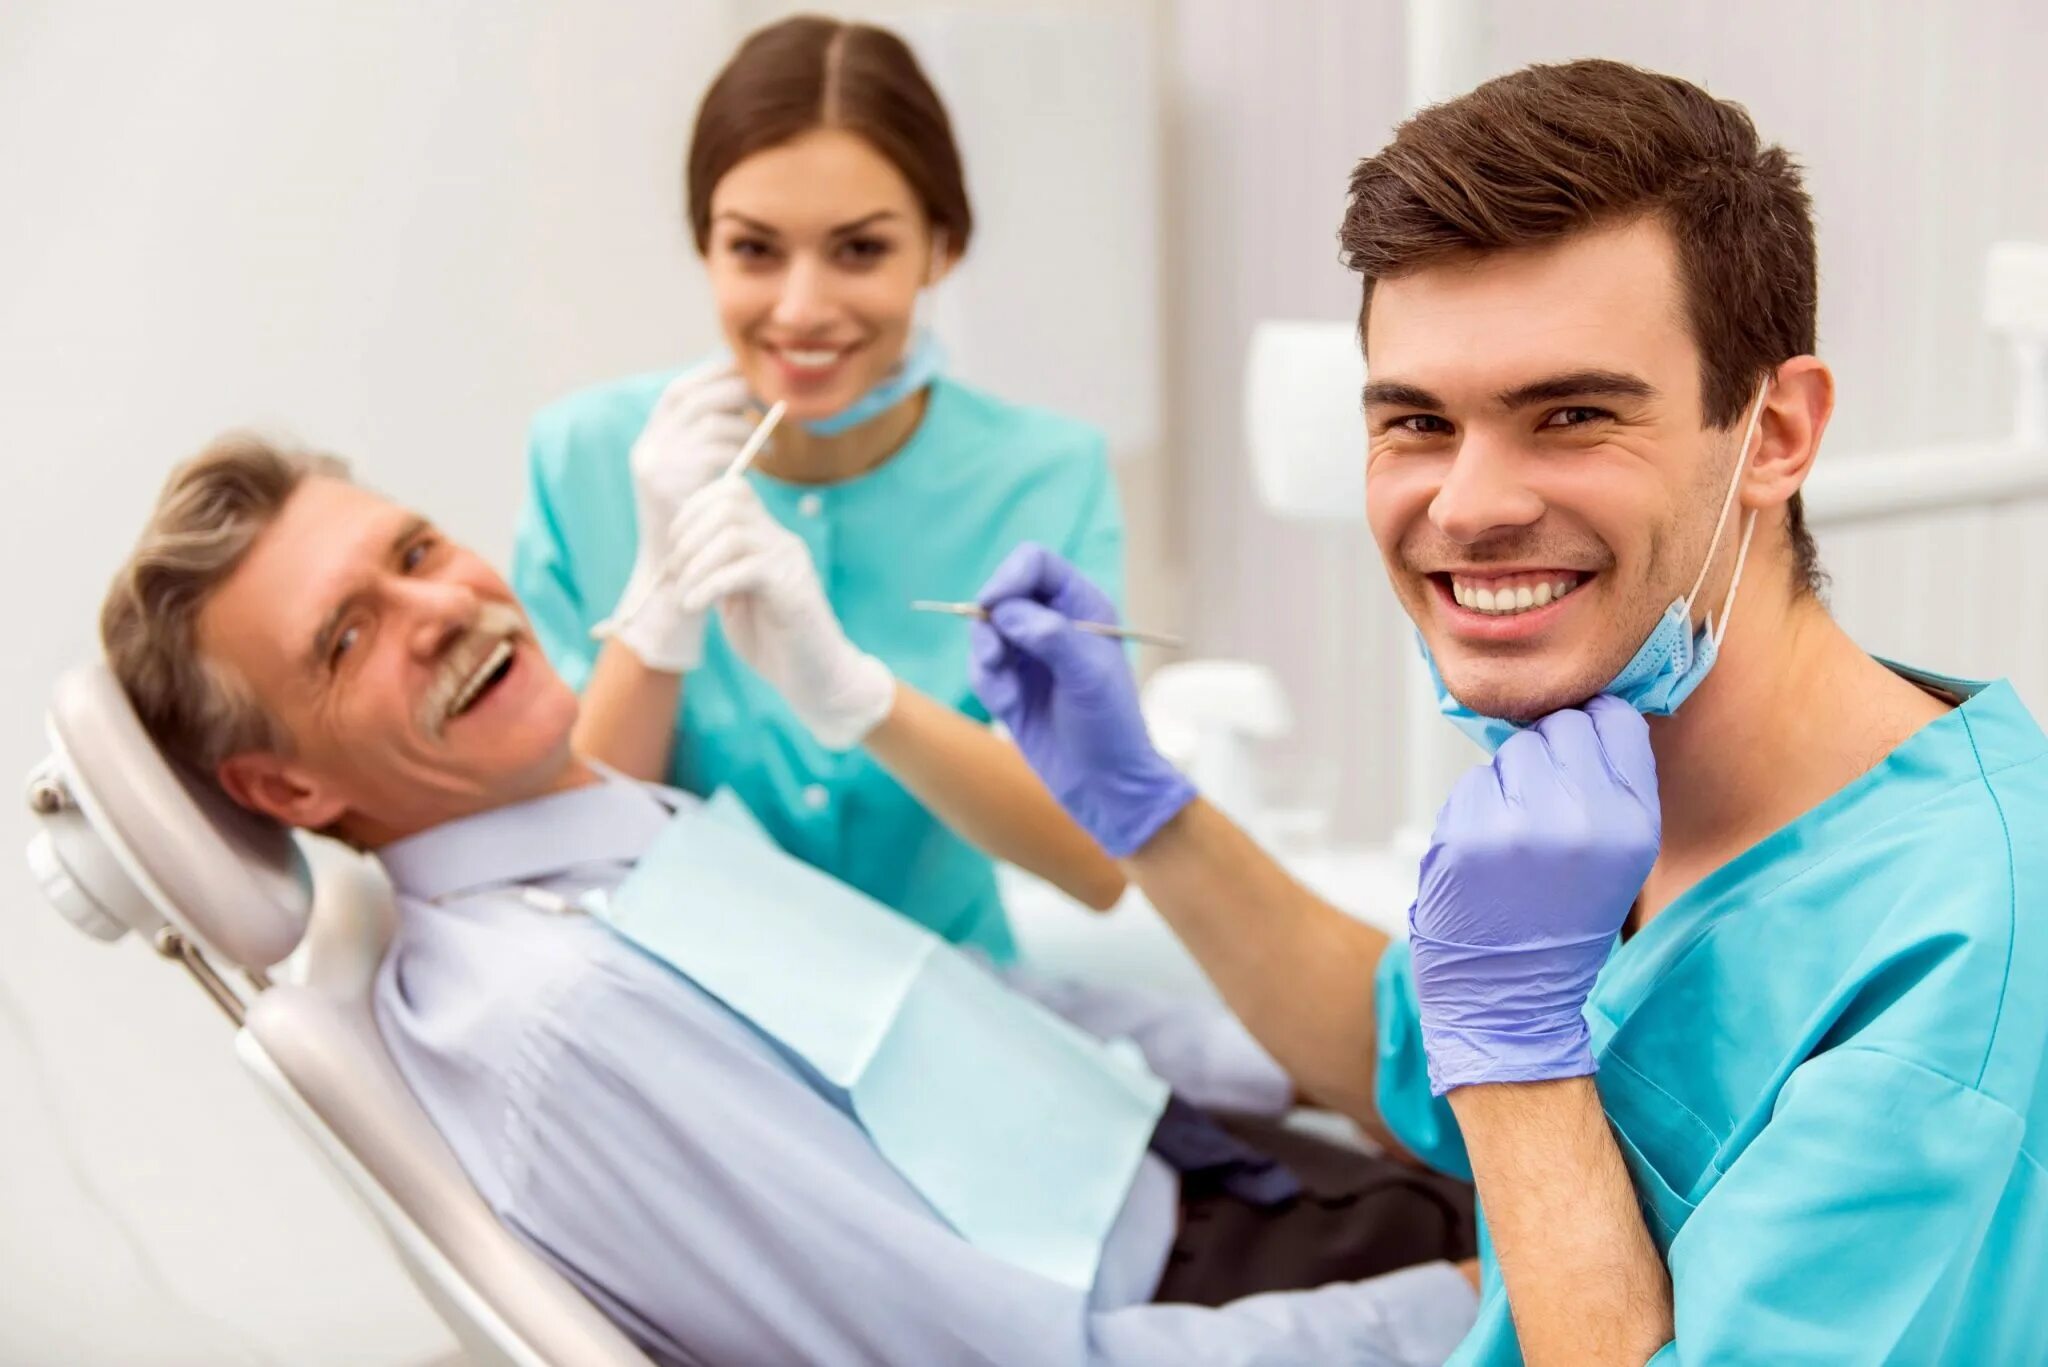 Врачи стоматологии рейтинг. Стоматолог. Стоматолог и пациент. Пациент у дантиста. Зубной врач.